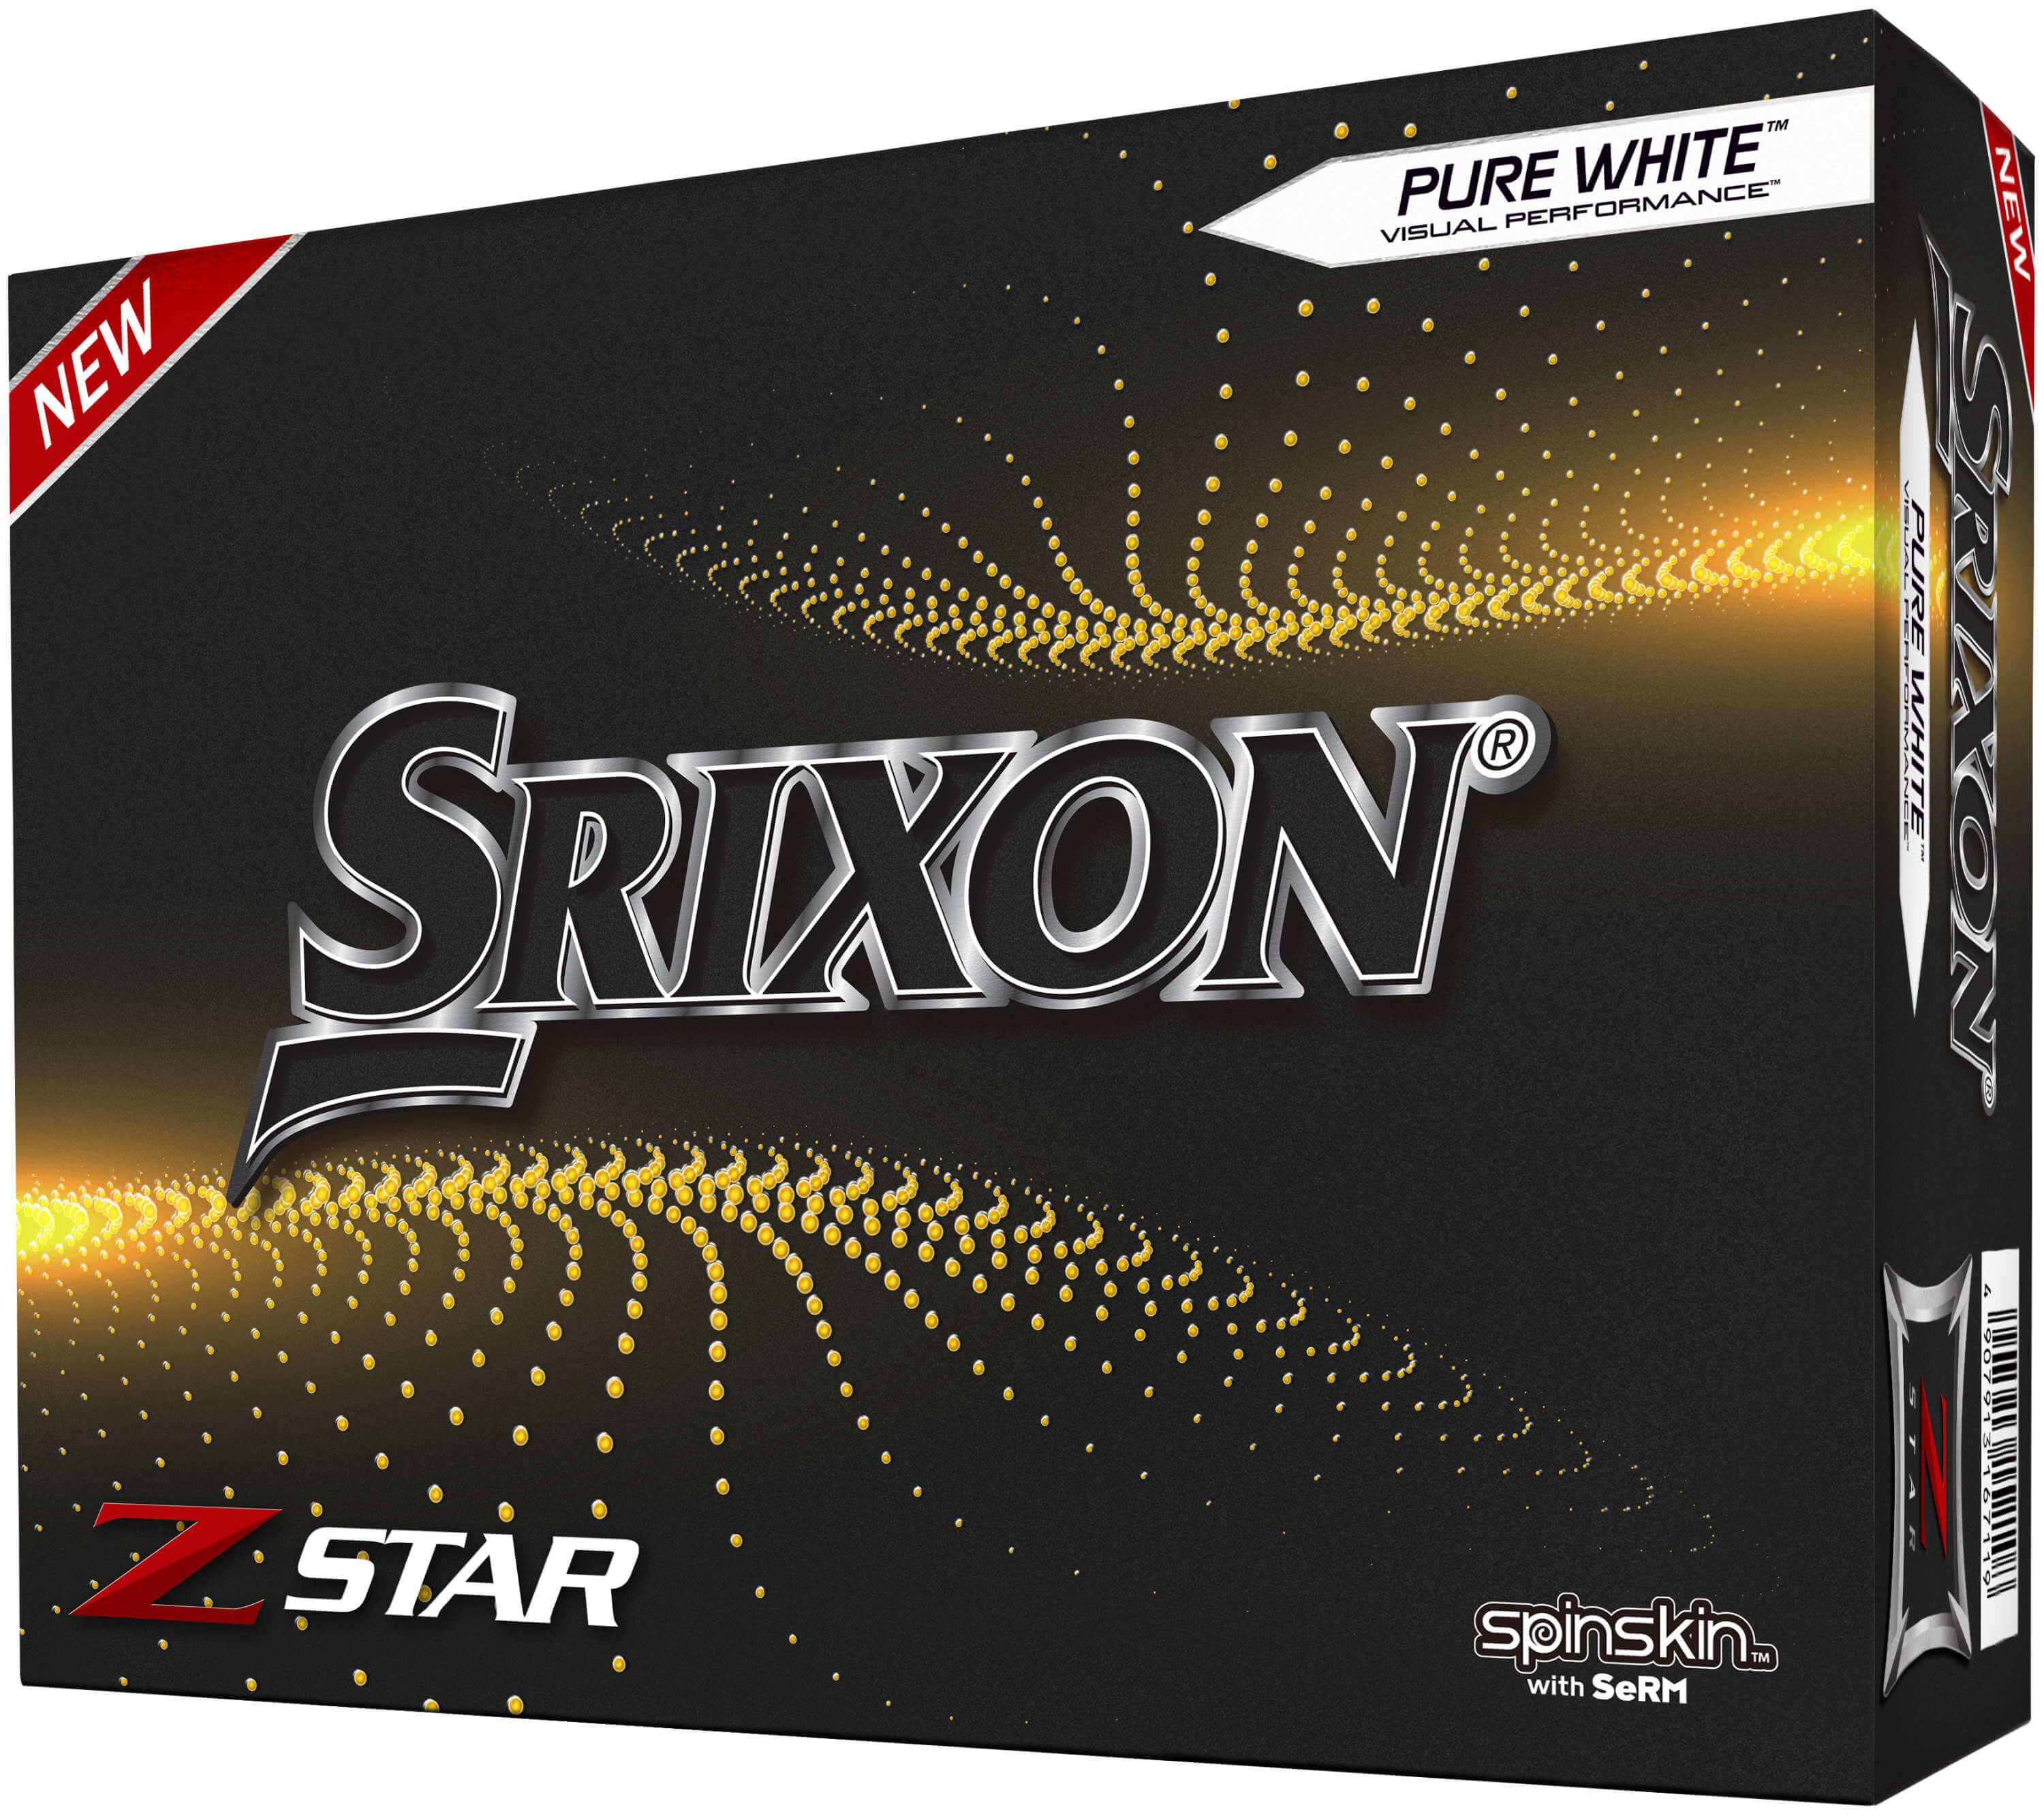 Srixon Z-STAR Pure white Golfbälle